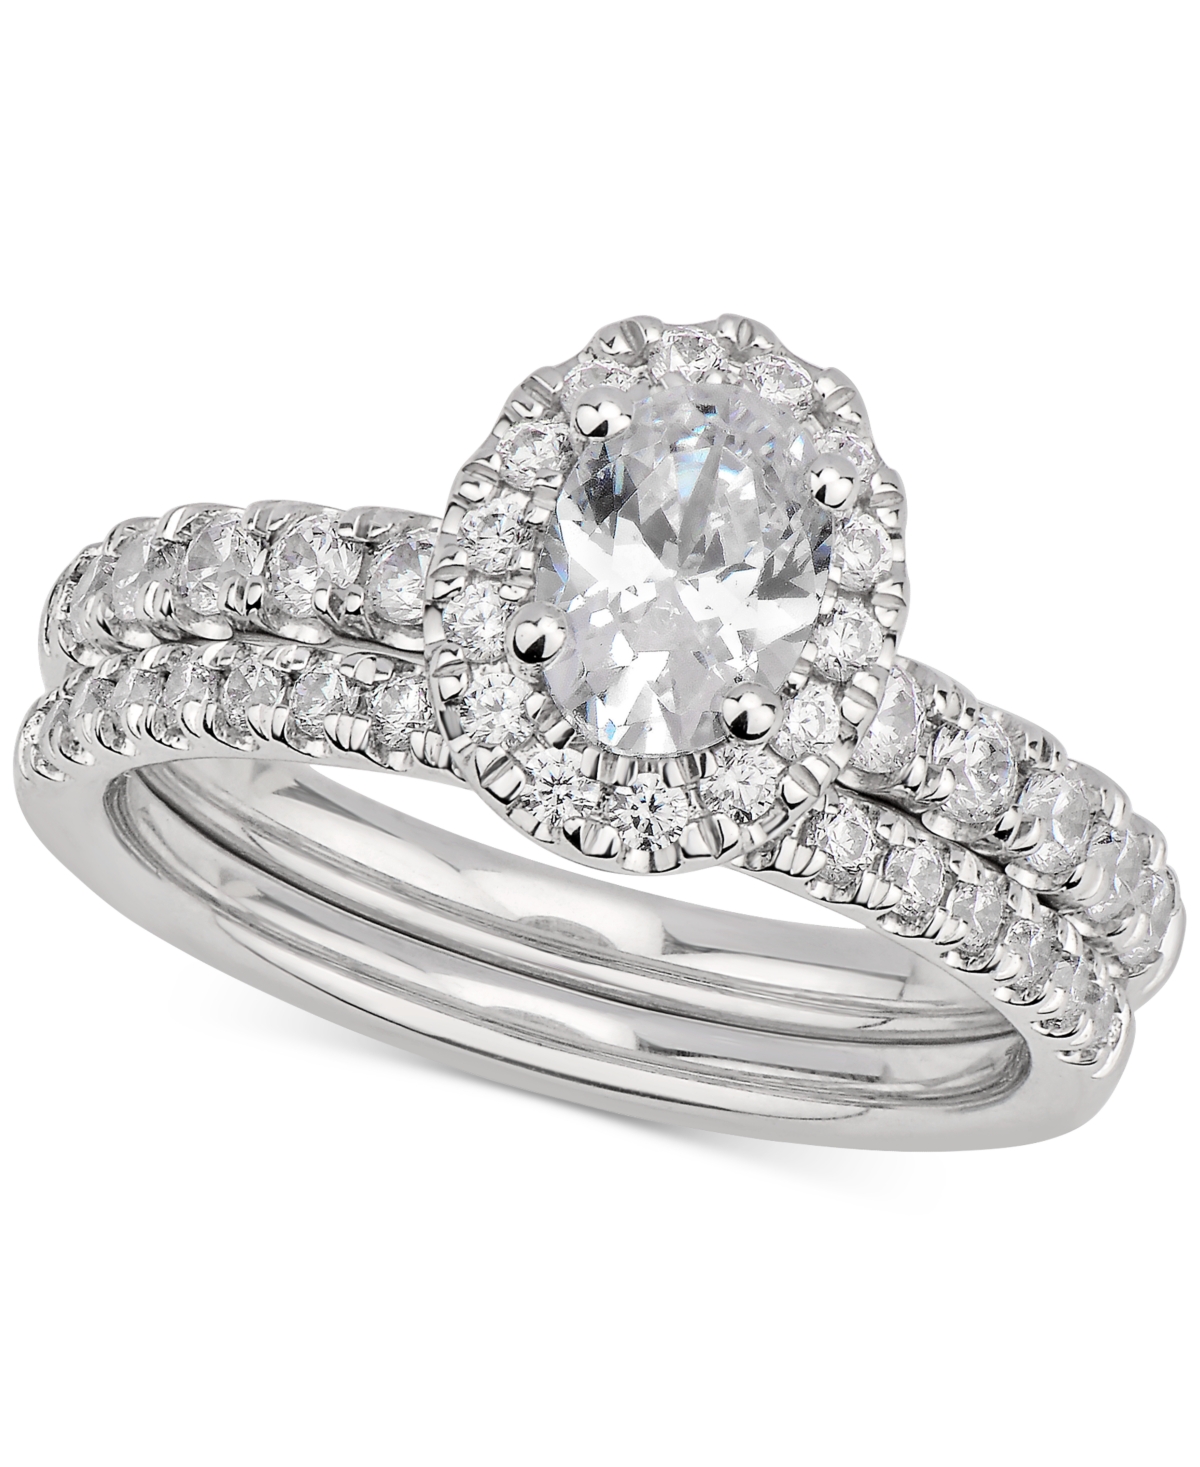 Gia Certified Oval Diamond Bridal Set (1-1/2 ct. t.w.) in 14k White Gold - White Gold